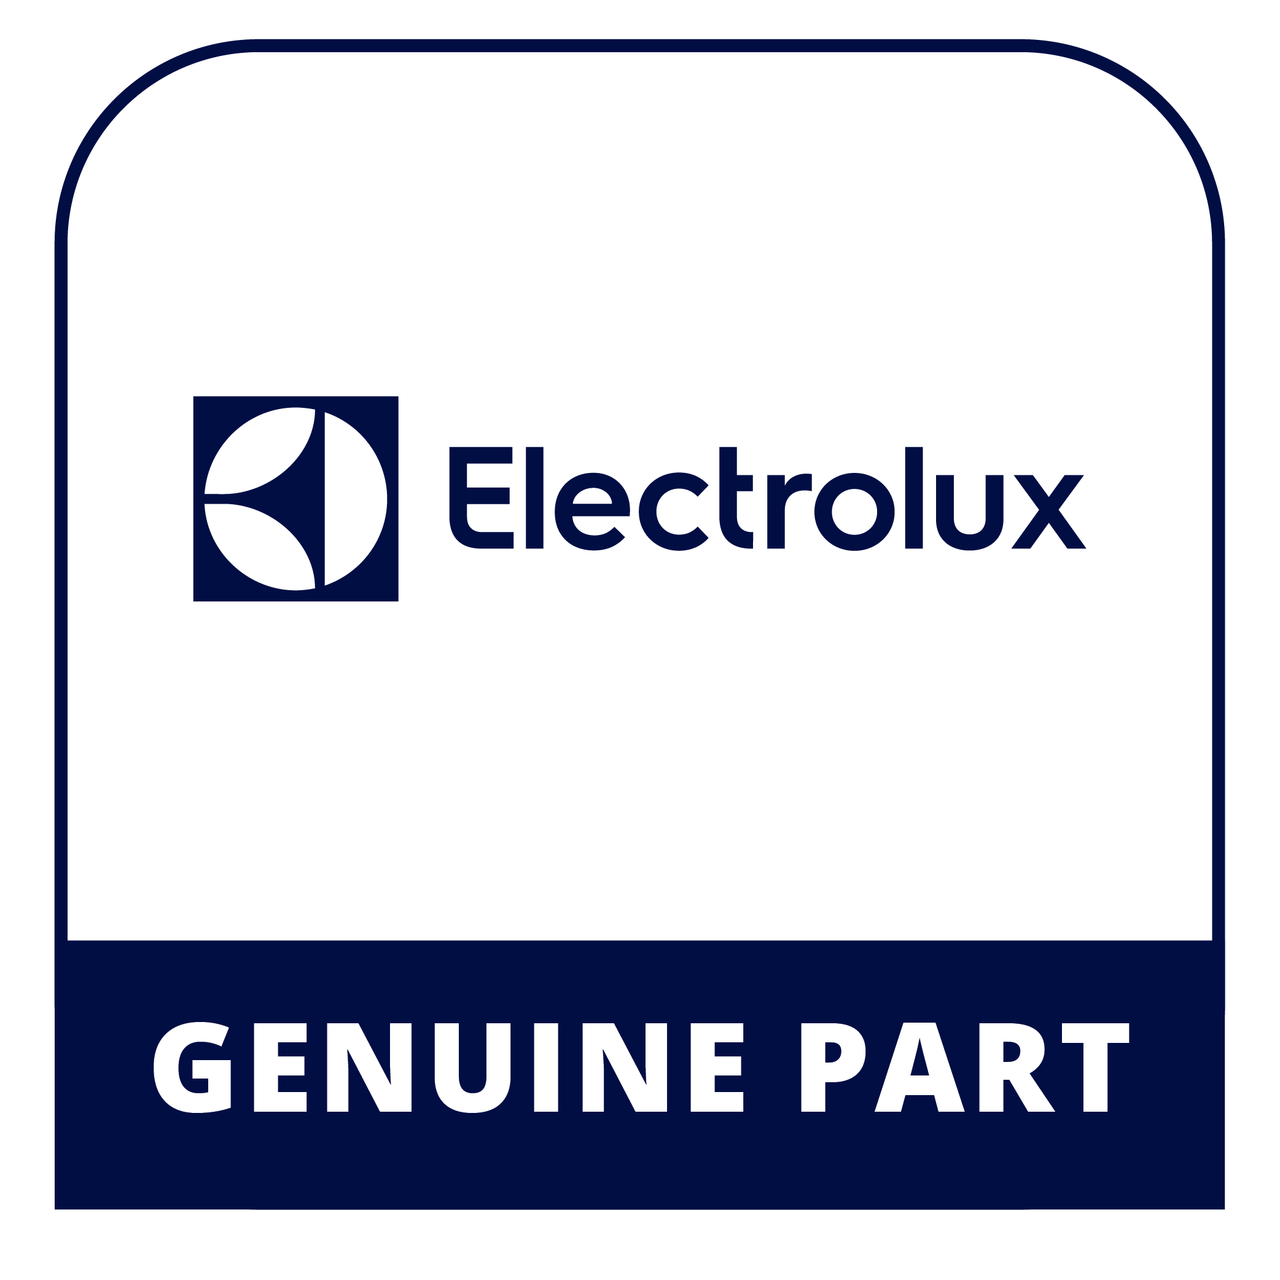 Frigidaire - Electrolux 242120508 - Cover-Crisper Pan - Genuine Electrolux Part